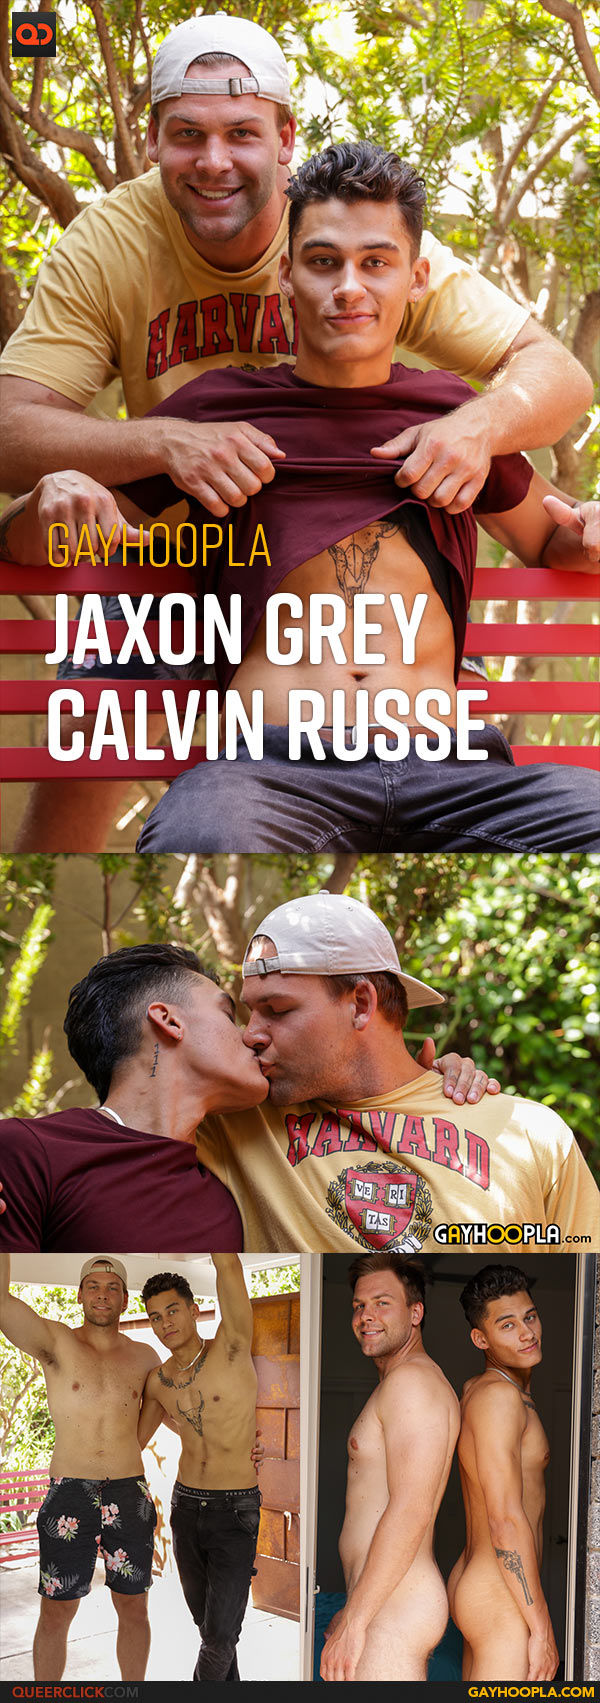 Jaxon grey gay